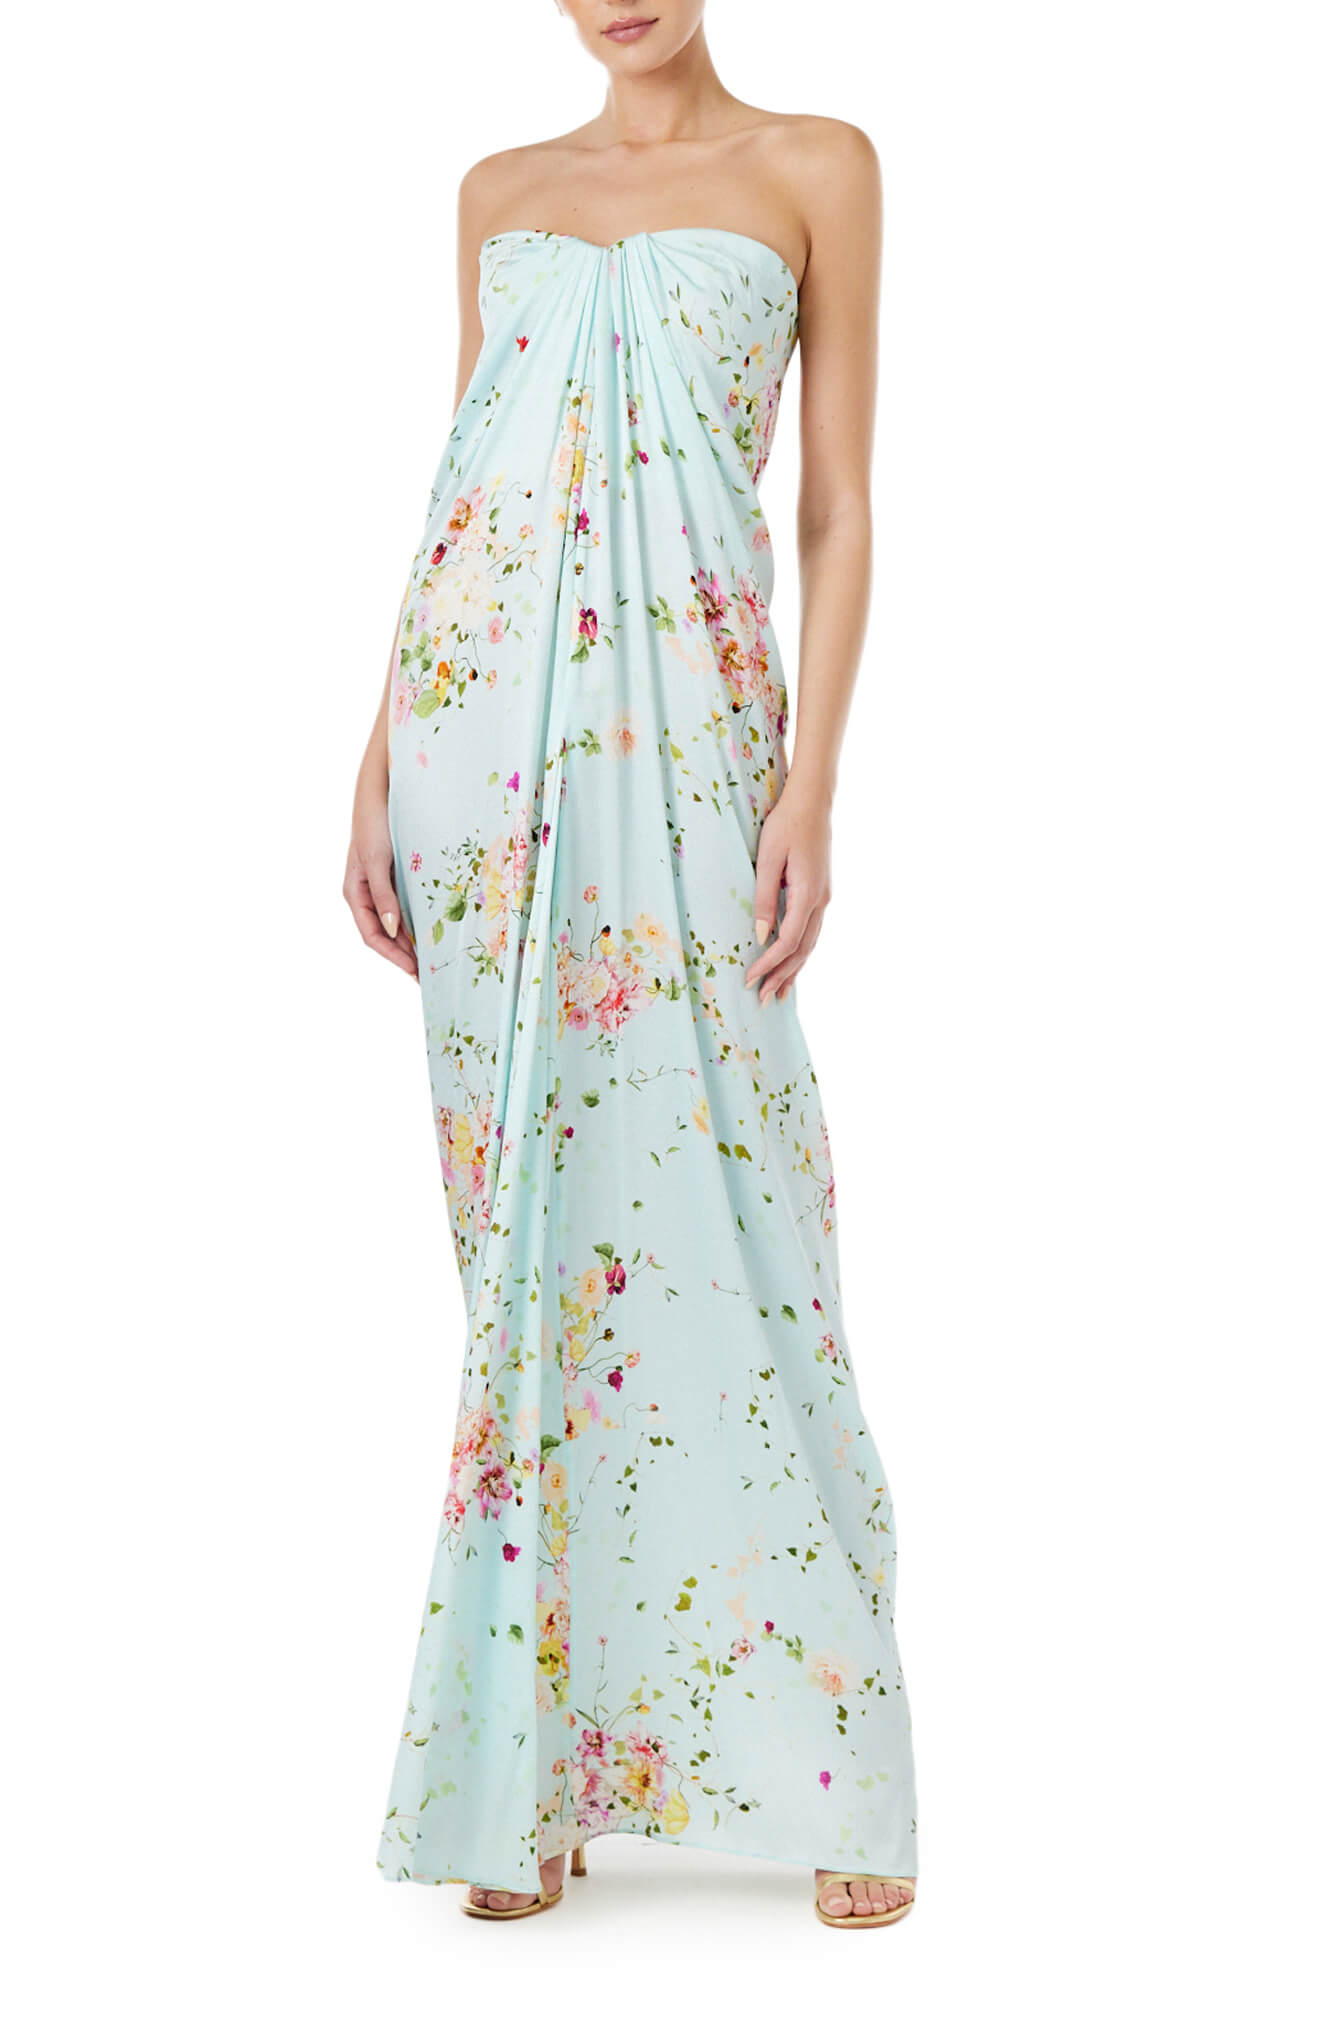 Monique Lhuillier strapless draped gown in pistachio floral print fabric.